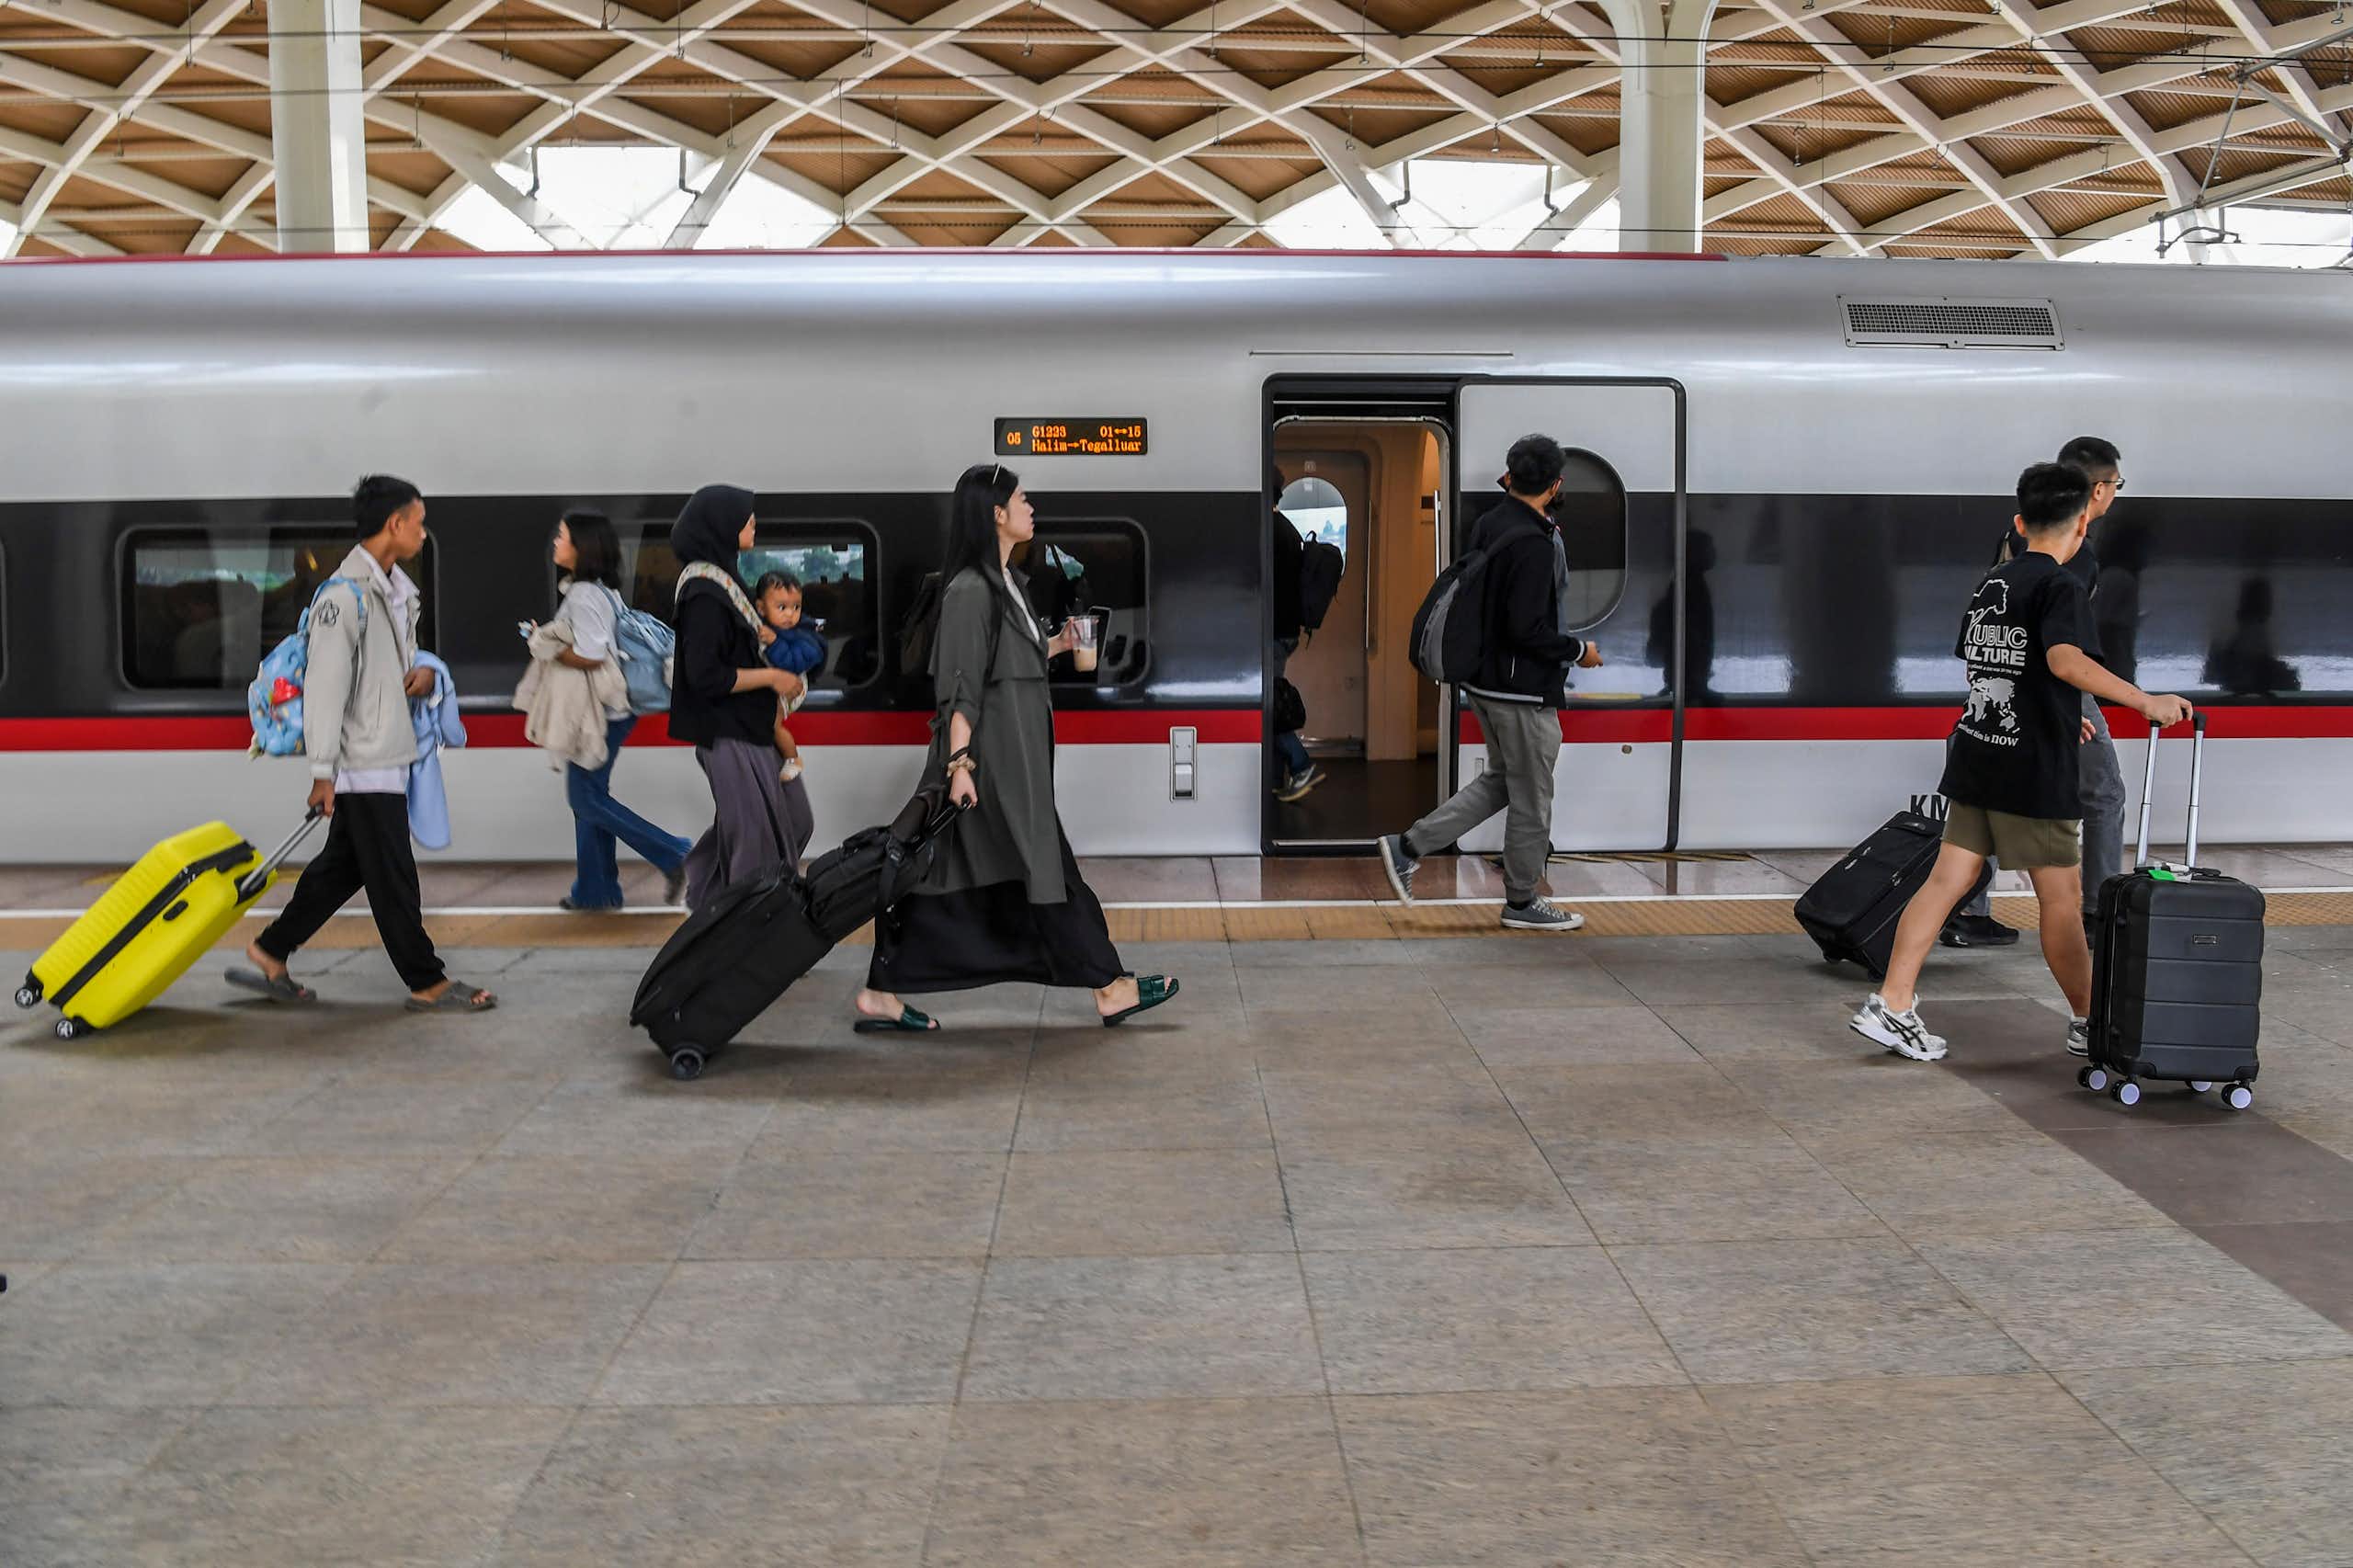 Cek Fakta: Luhut sebut proyek kereta cepat Jakarta-Bandung sudah layak dilanjutkan sampai Surabaya. Benarkah?